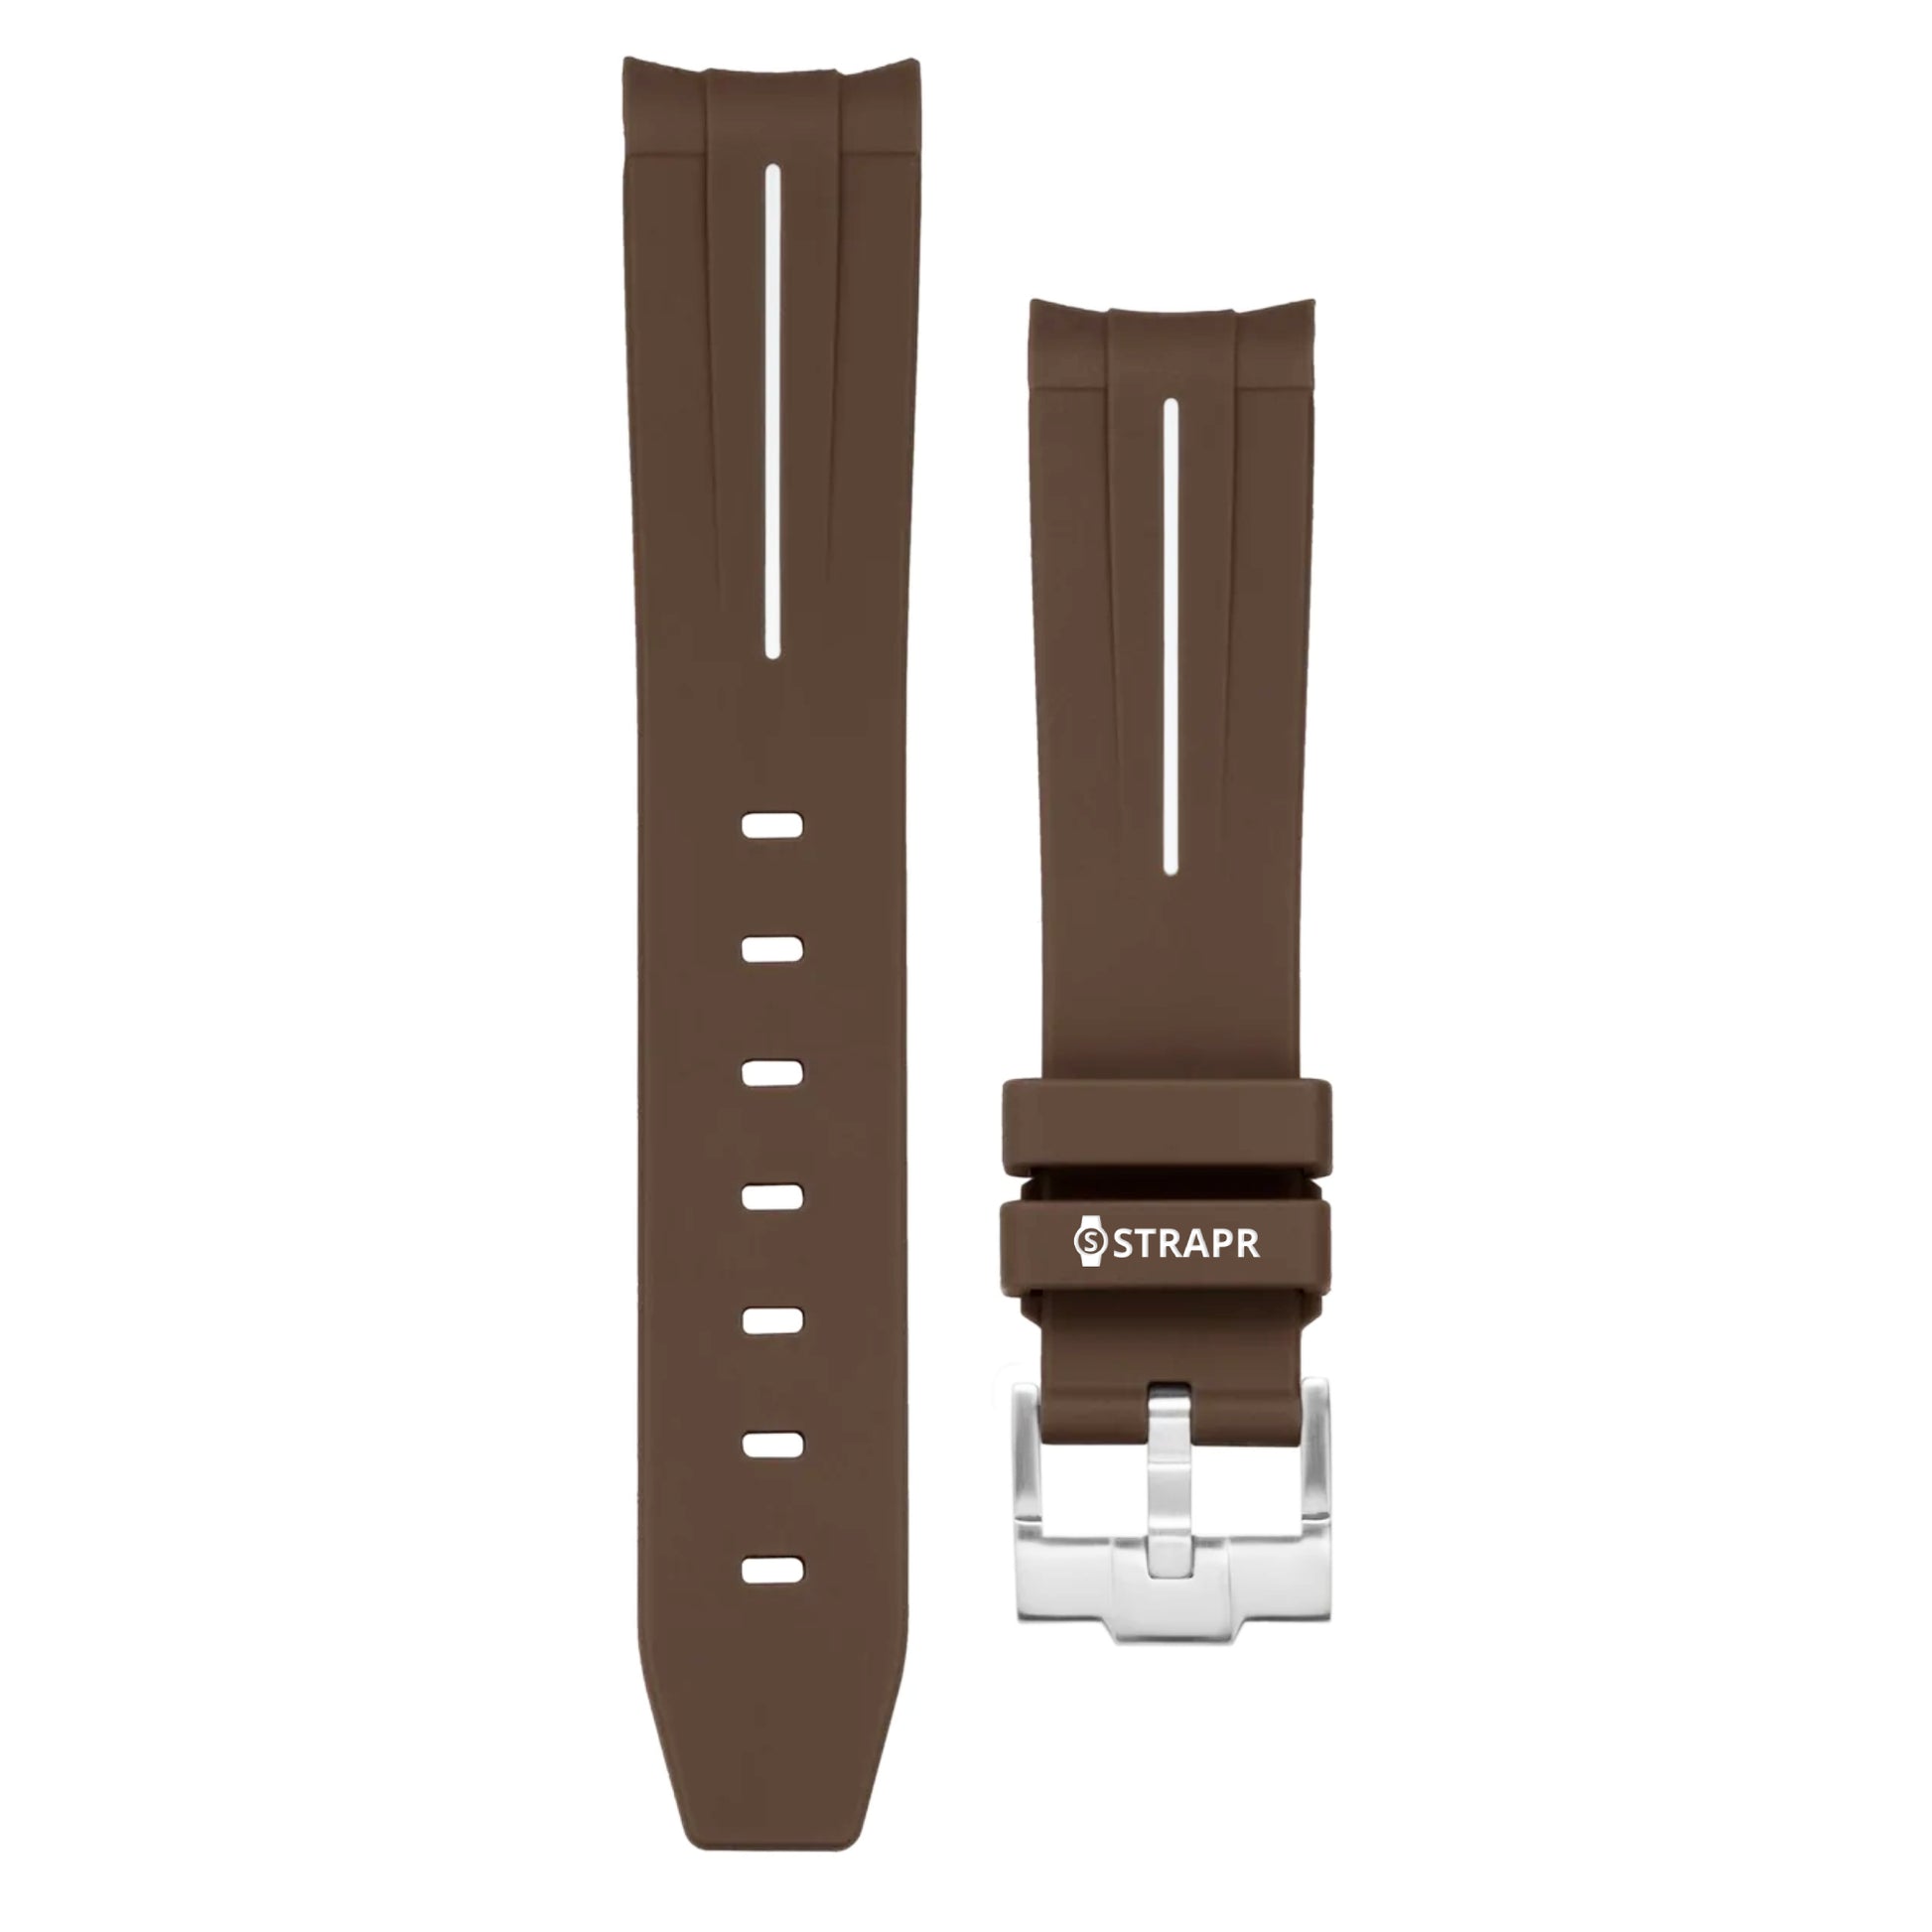 Omega Swatch MoonSwatch cinturino strap marrone e bianco